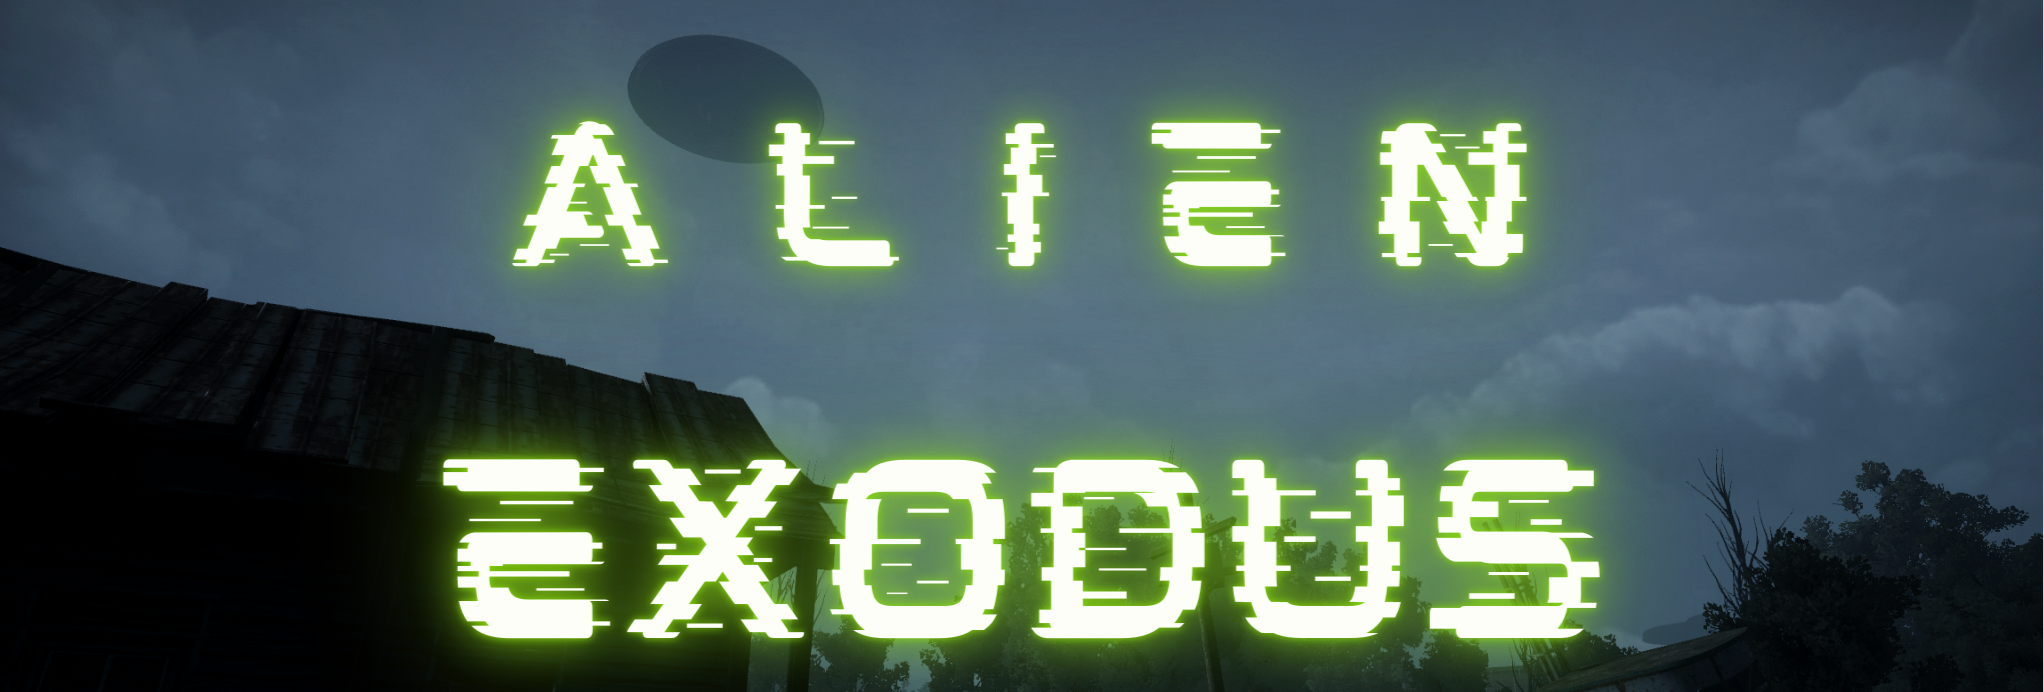 Alien Exodus: Last Escape